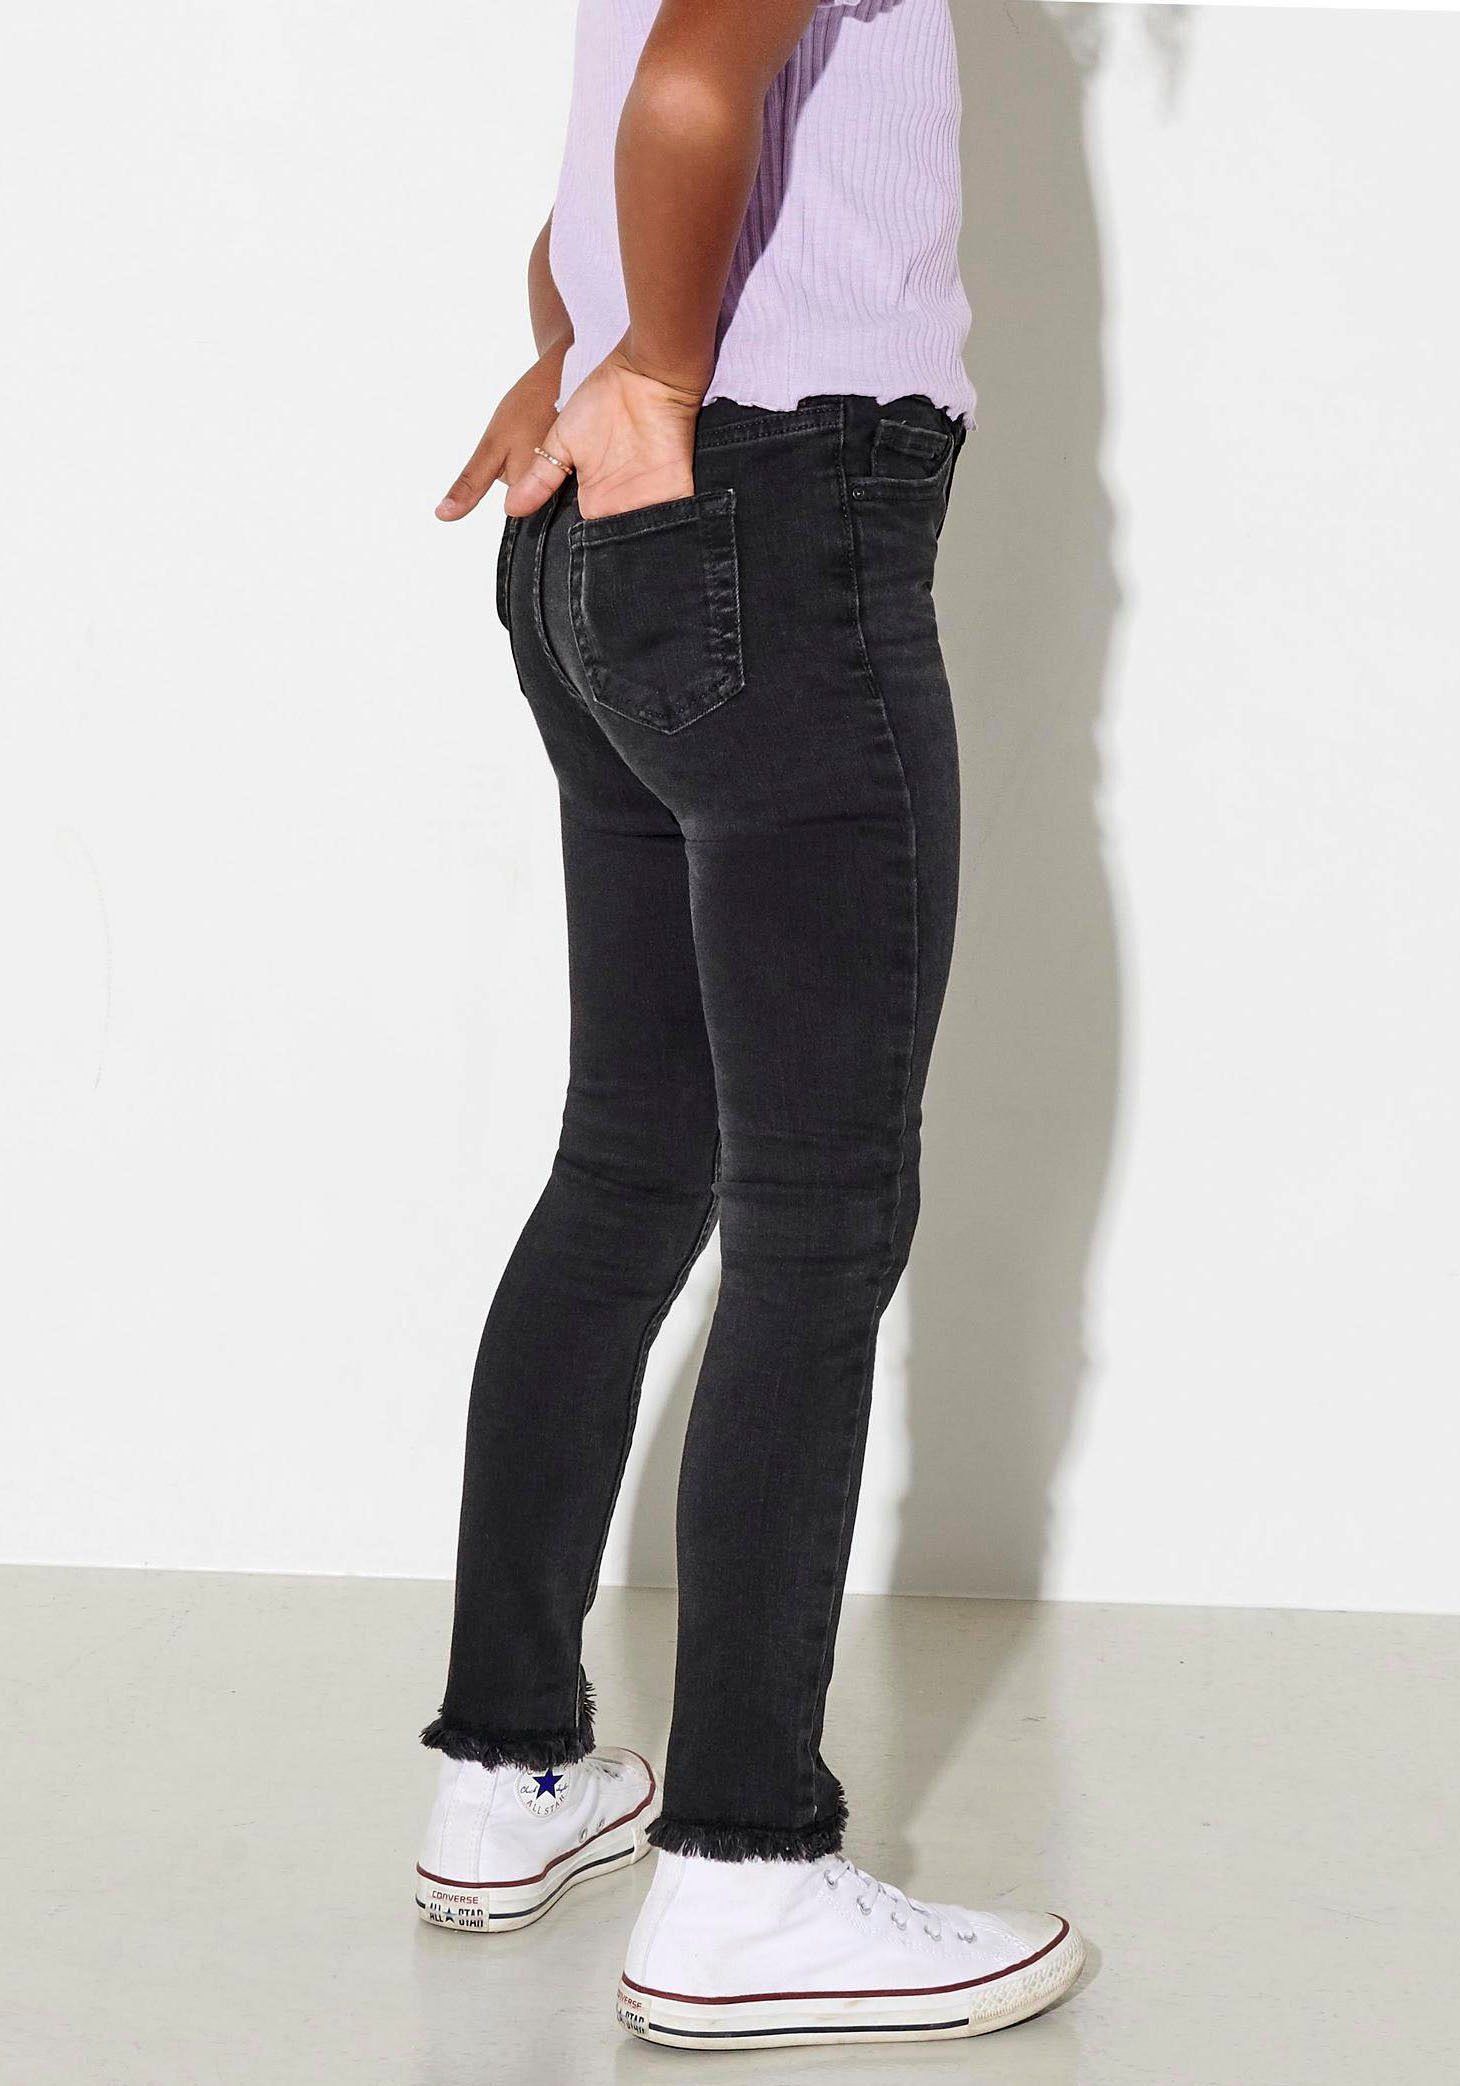 OTTO | jeans online ONLY Stretch KONBLUSH verkrijgbaar KIDS